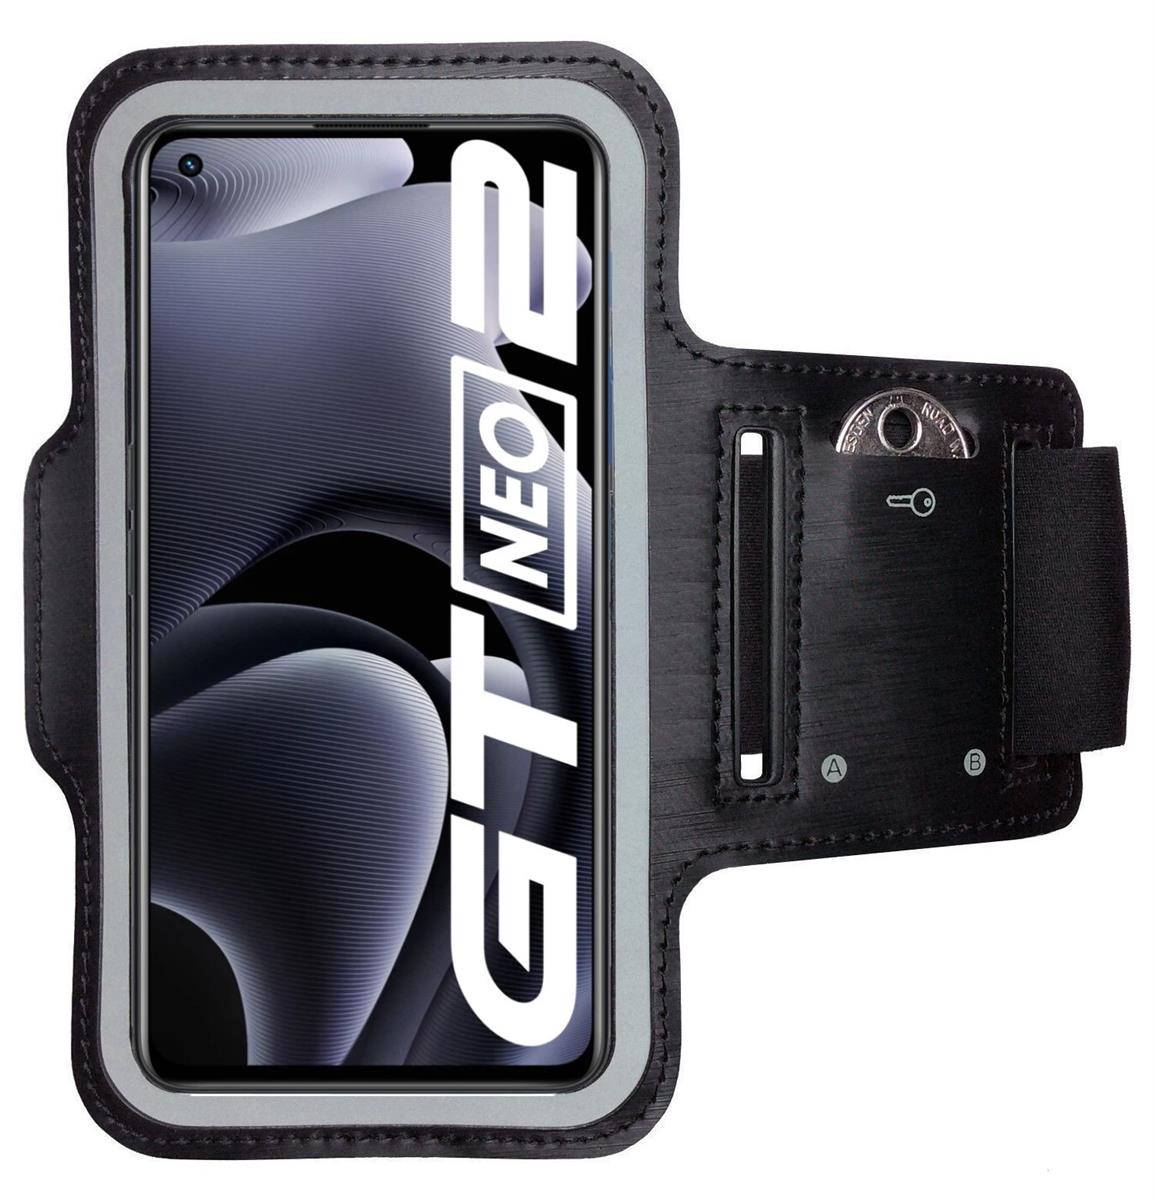 Sportarmband für Realme GT Neo 2 Handy Fitness Hülle Armband Laufhülle